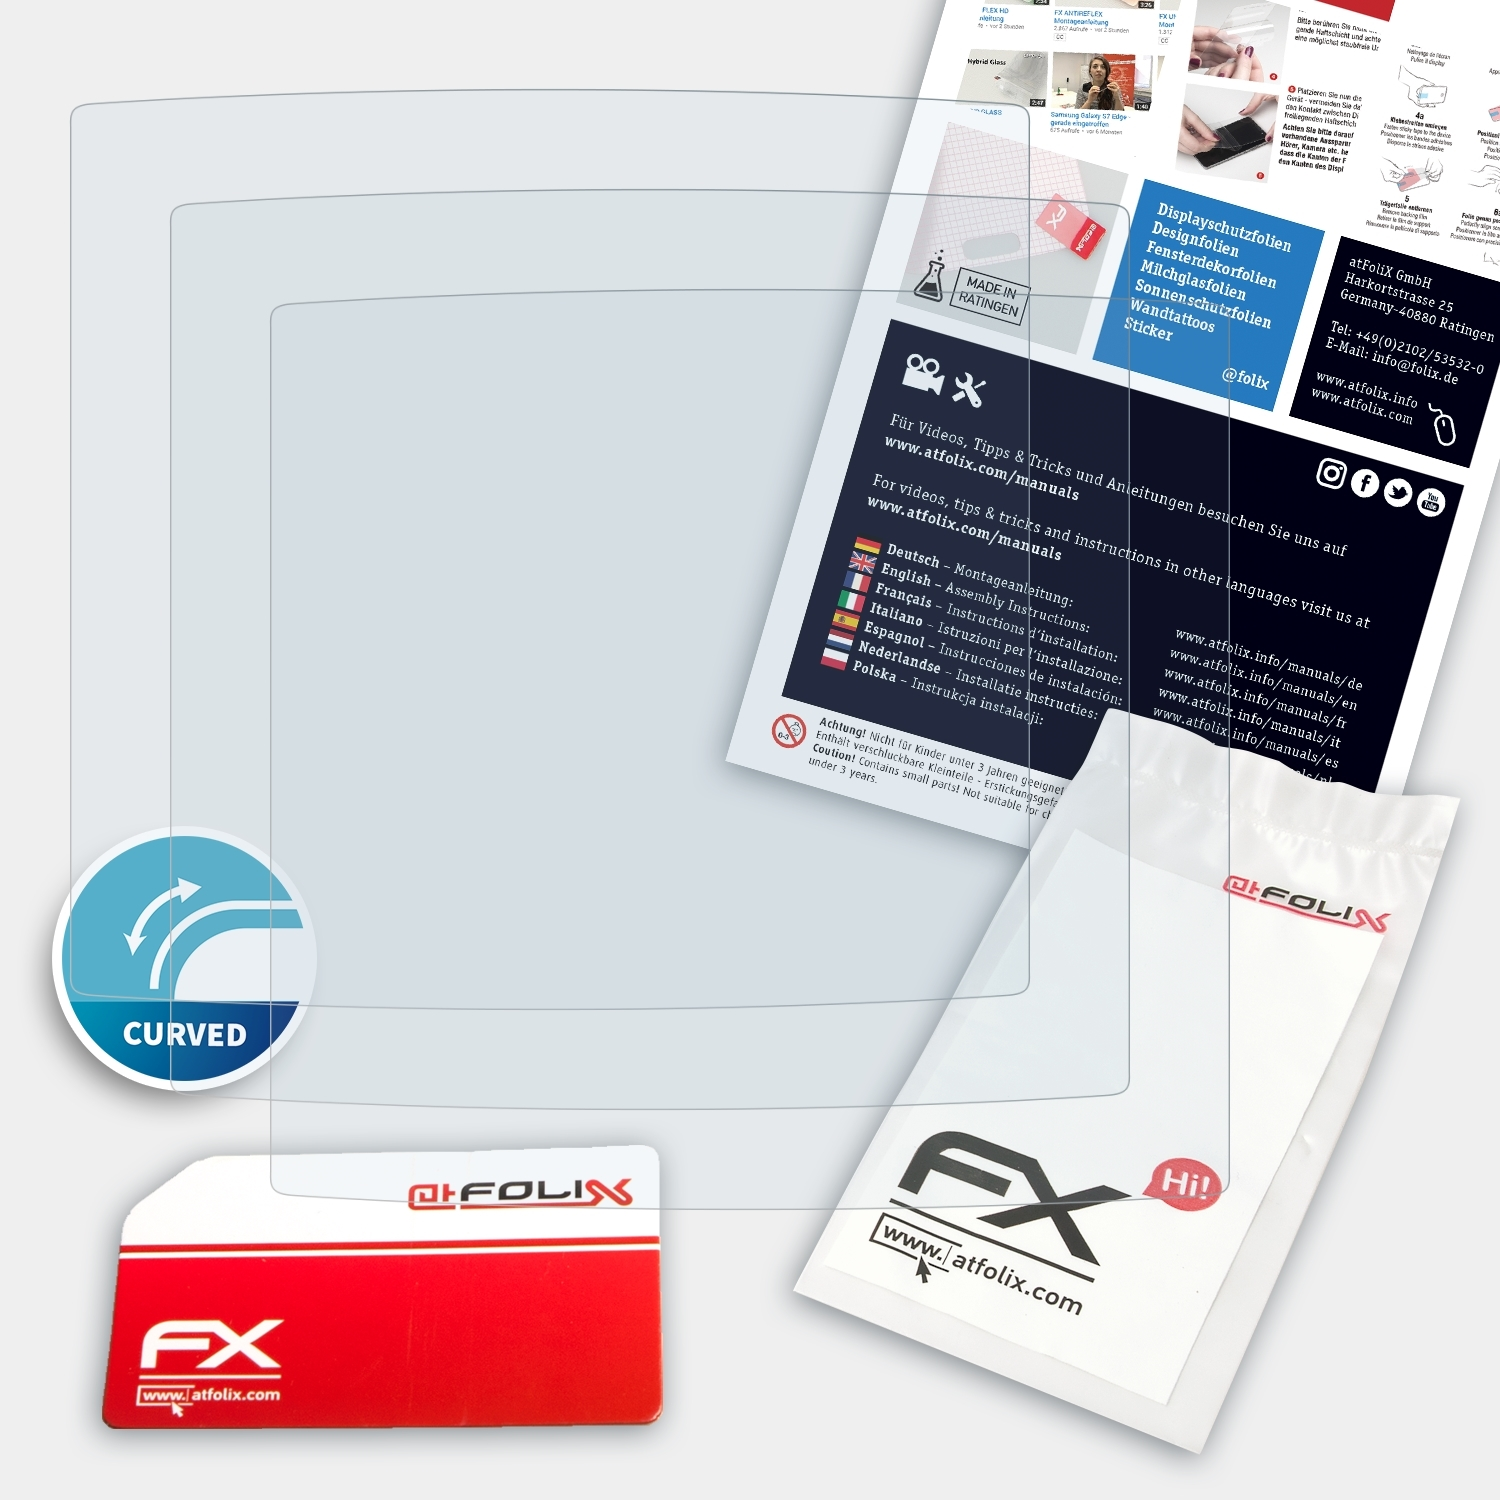 ATFOLIX 3x Rox FX-ActiFleX Sigma 6.0) Displayschutz(für